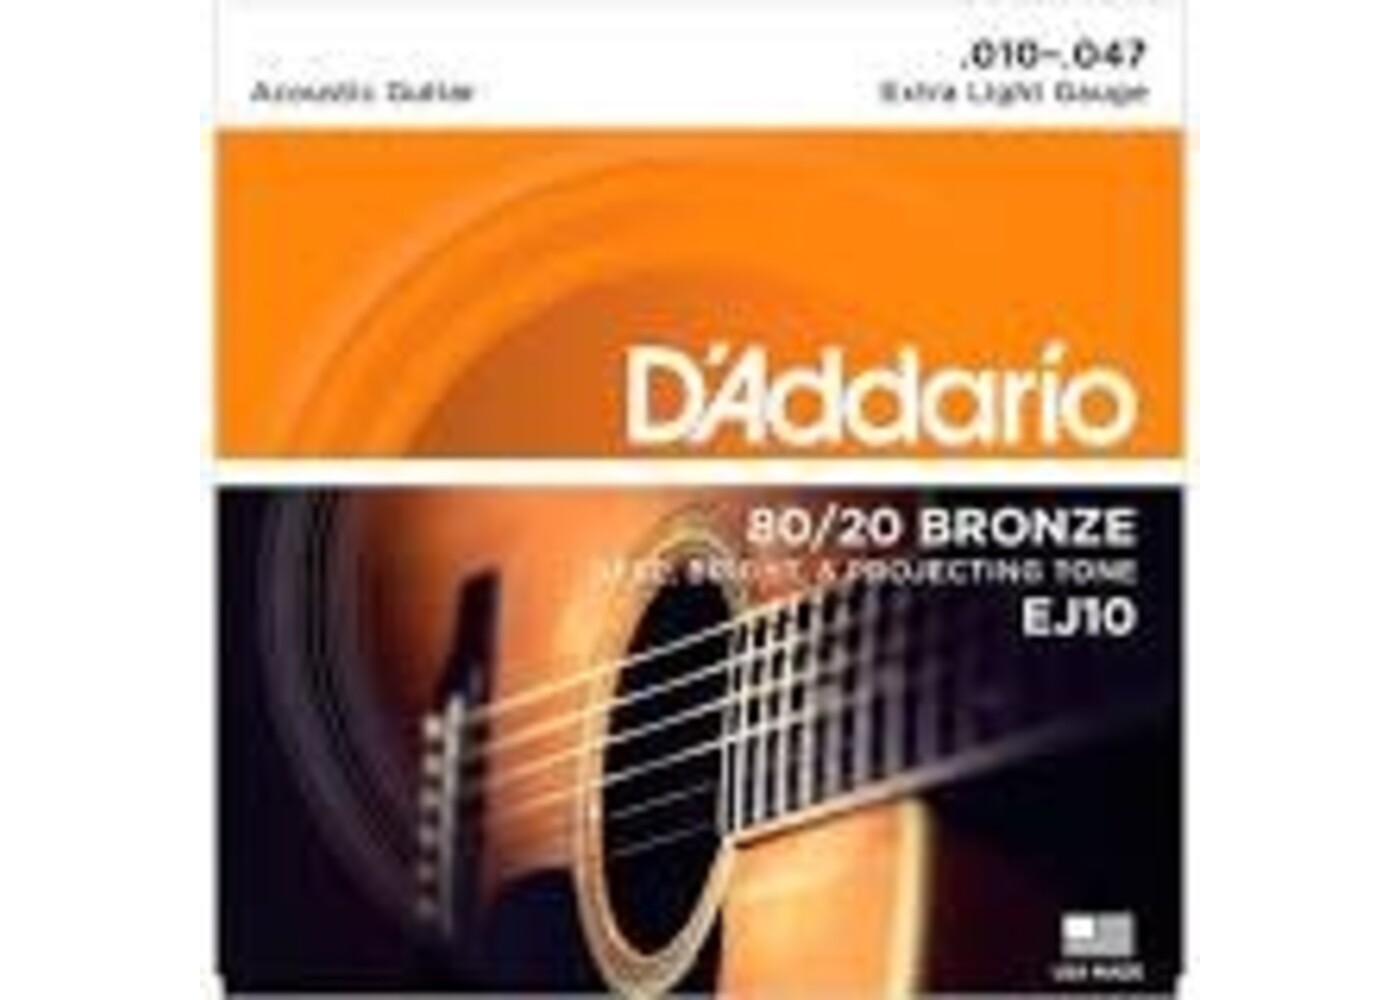 D'Addario D'Addario Acoustic 80/20 Bronze Extra Light Gauge